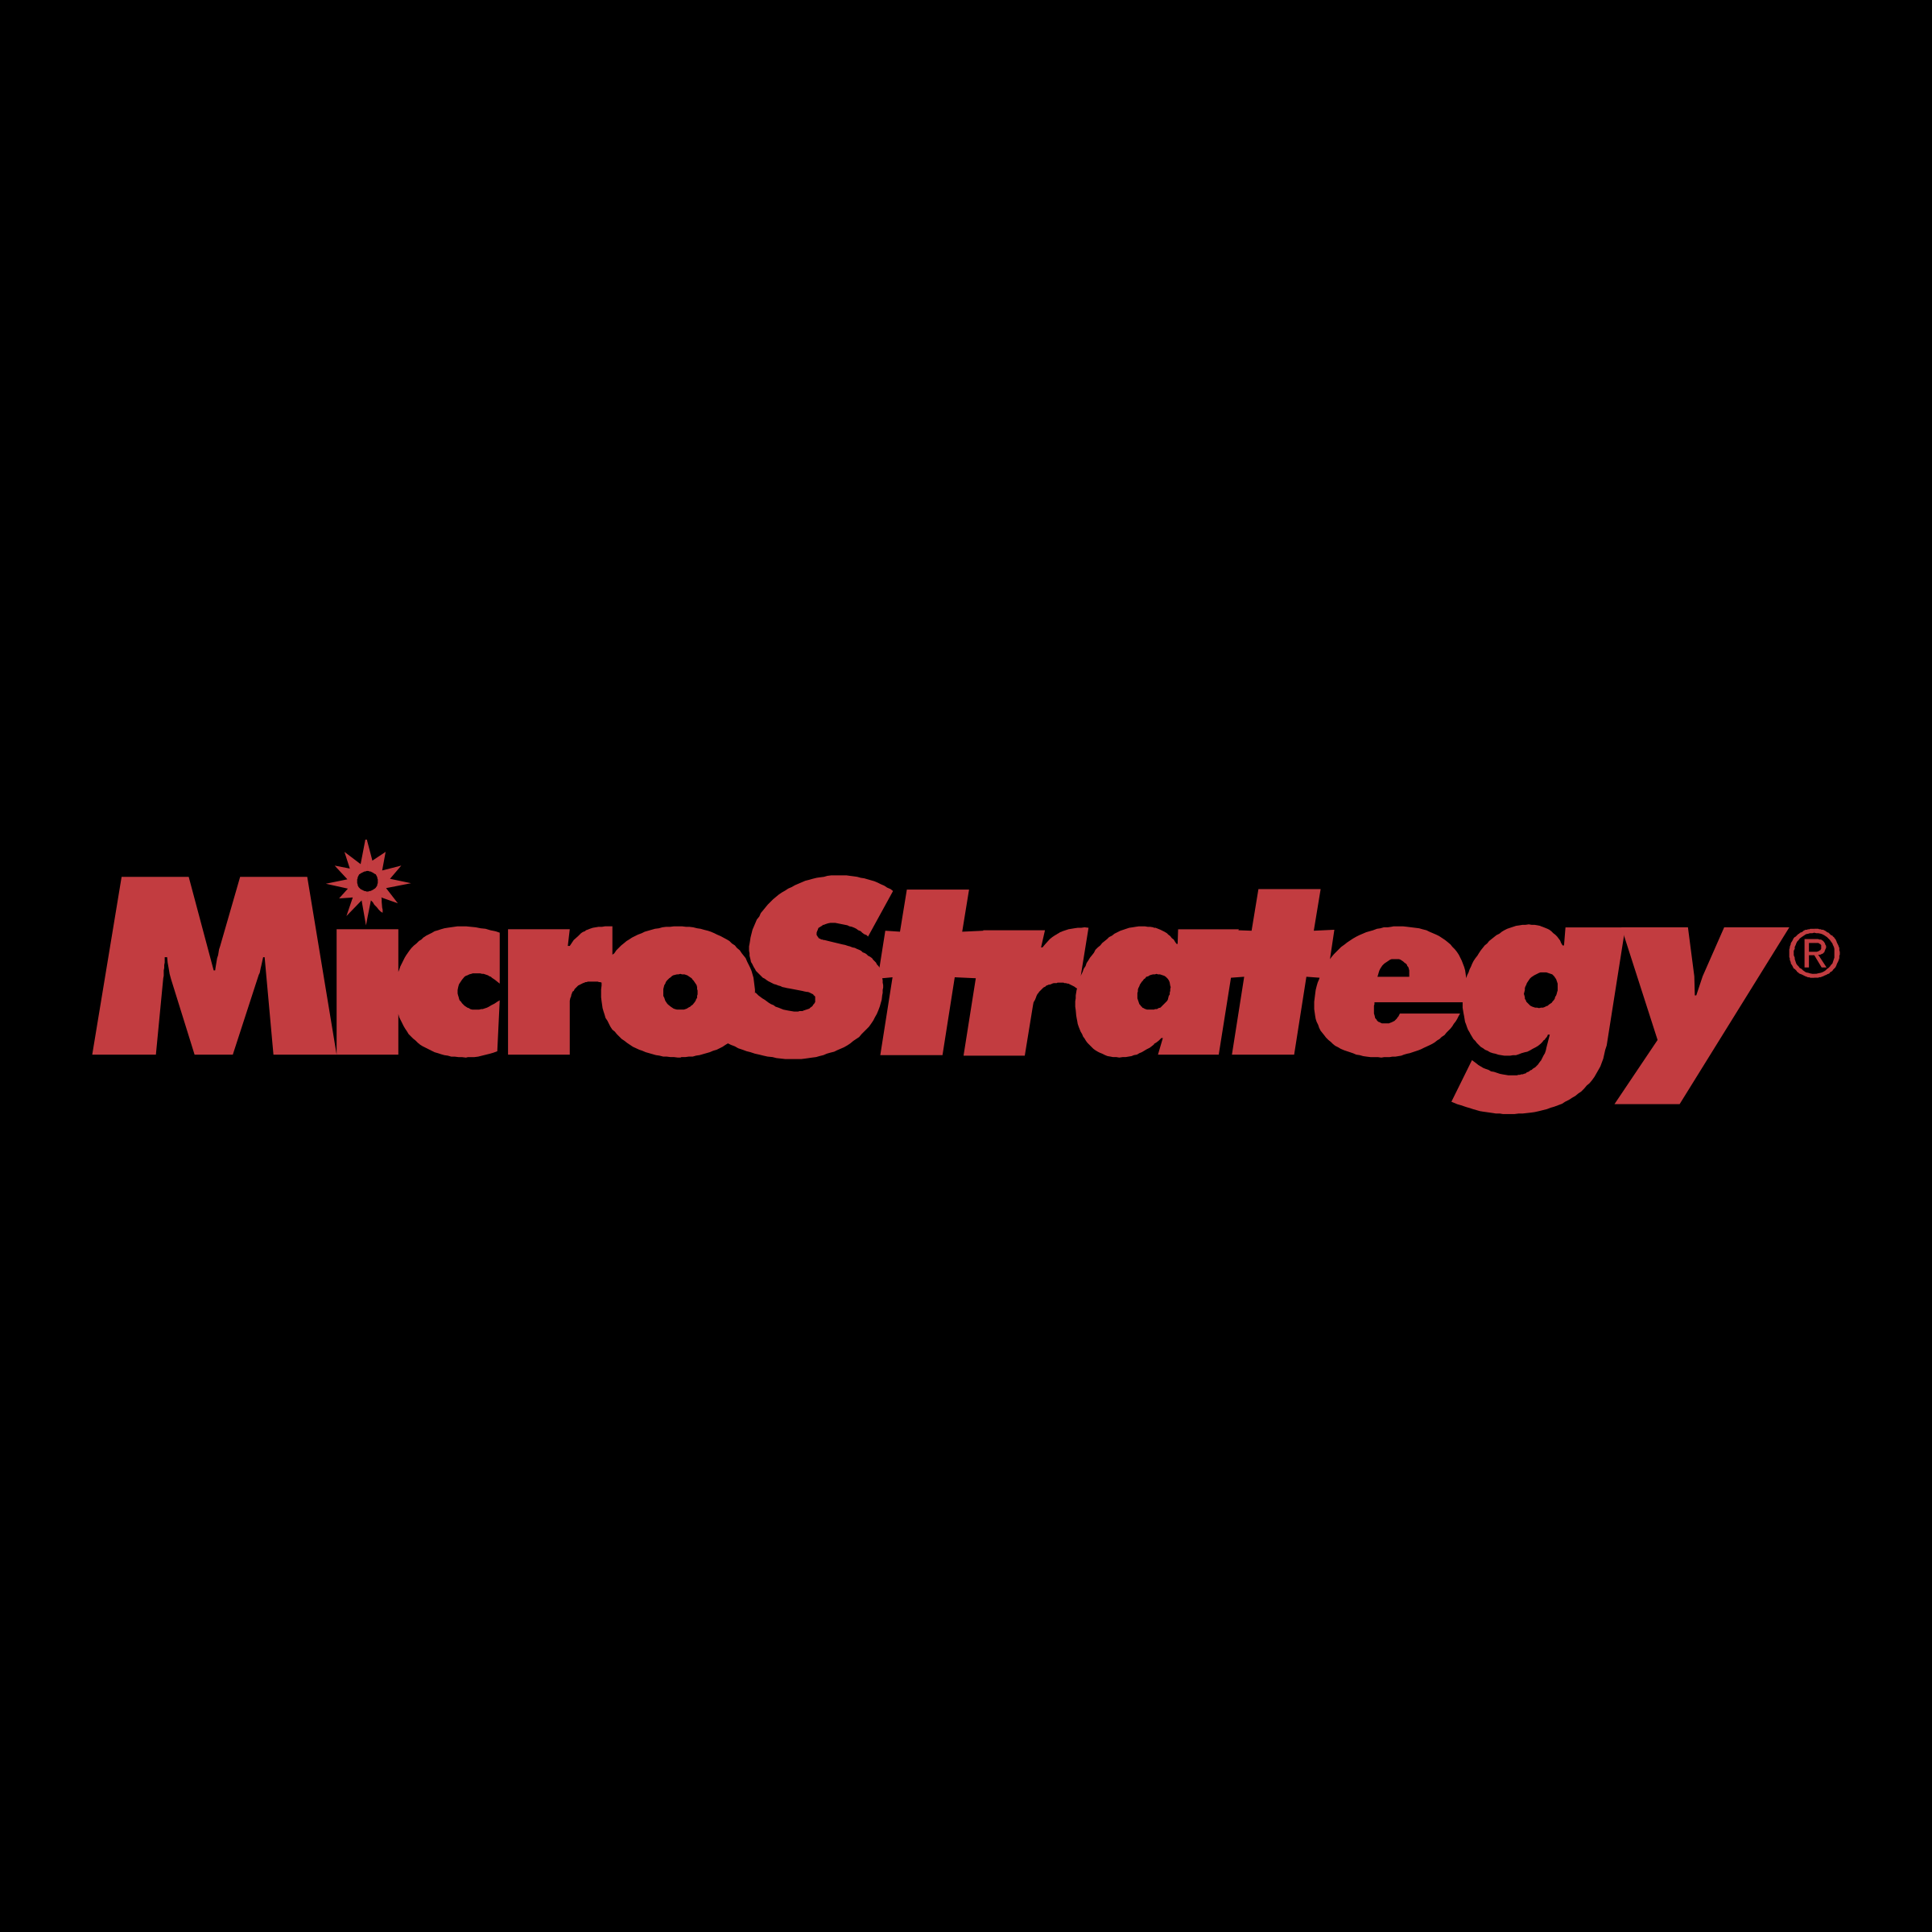 Investering van MicroStrategy winstgevender dan inkomsten